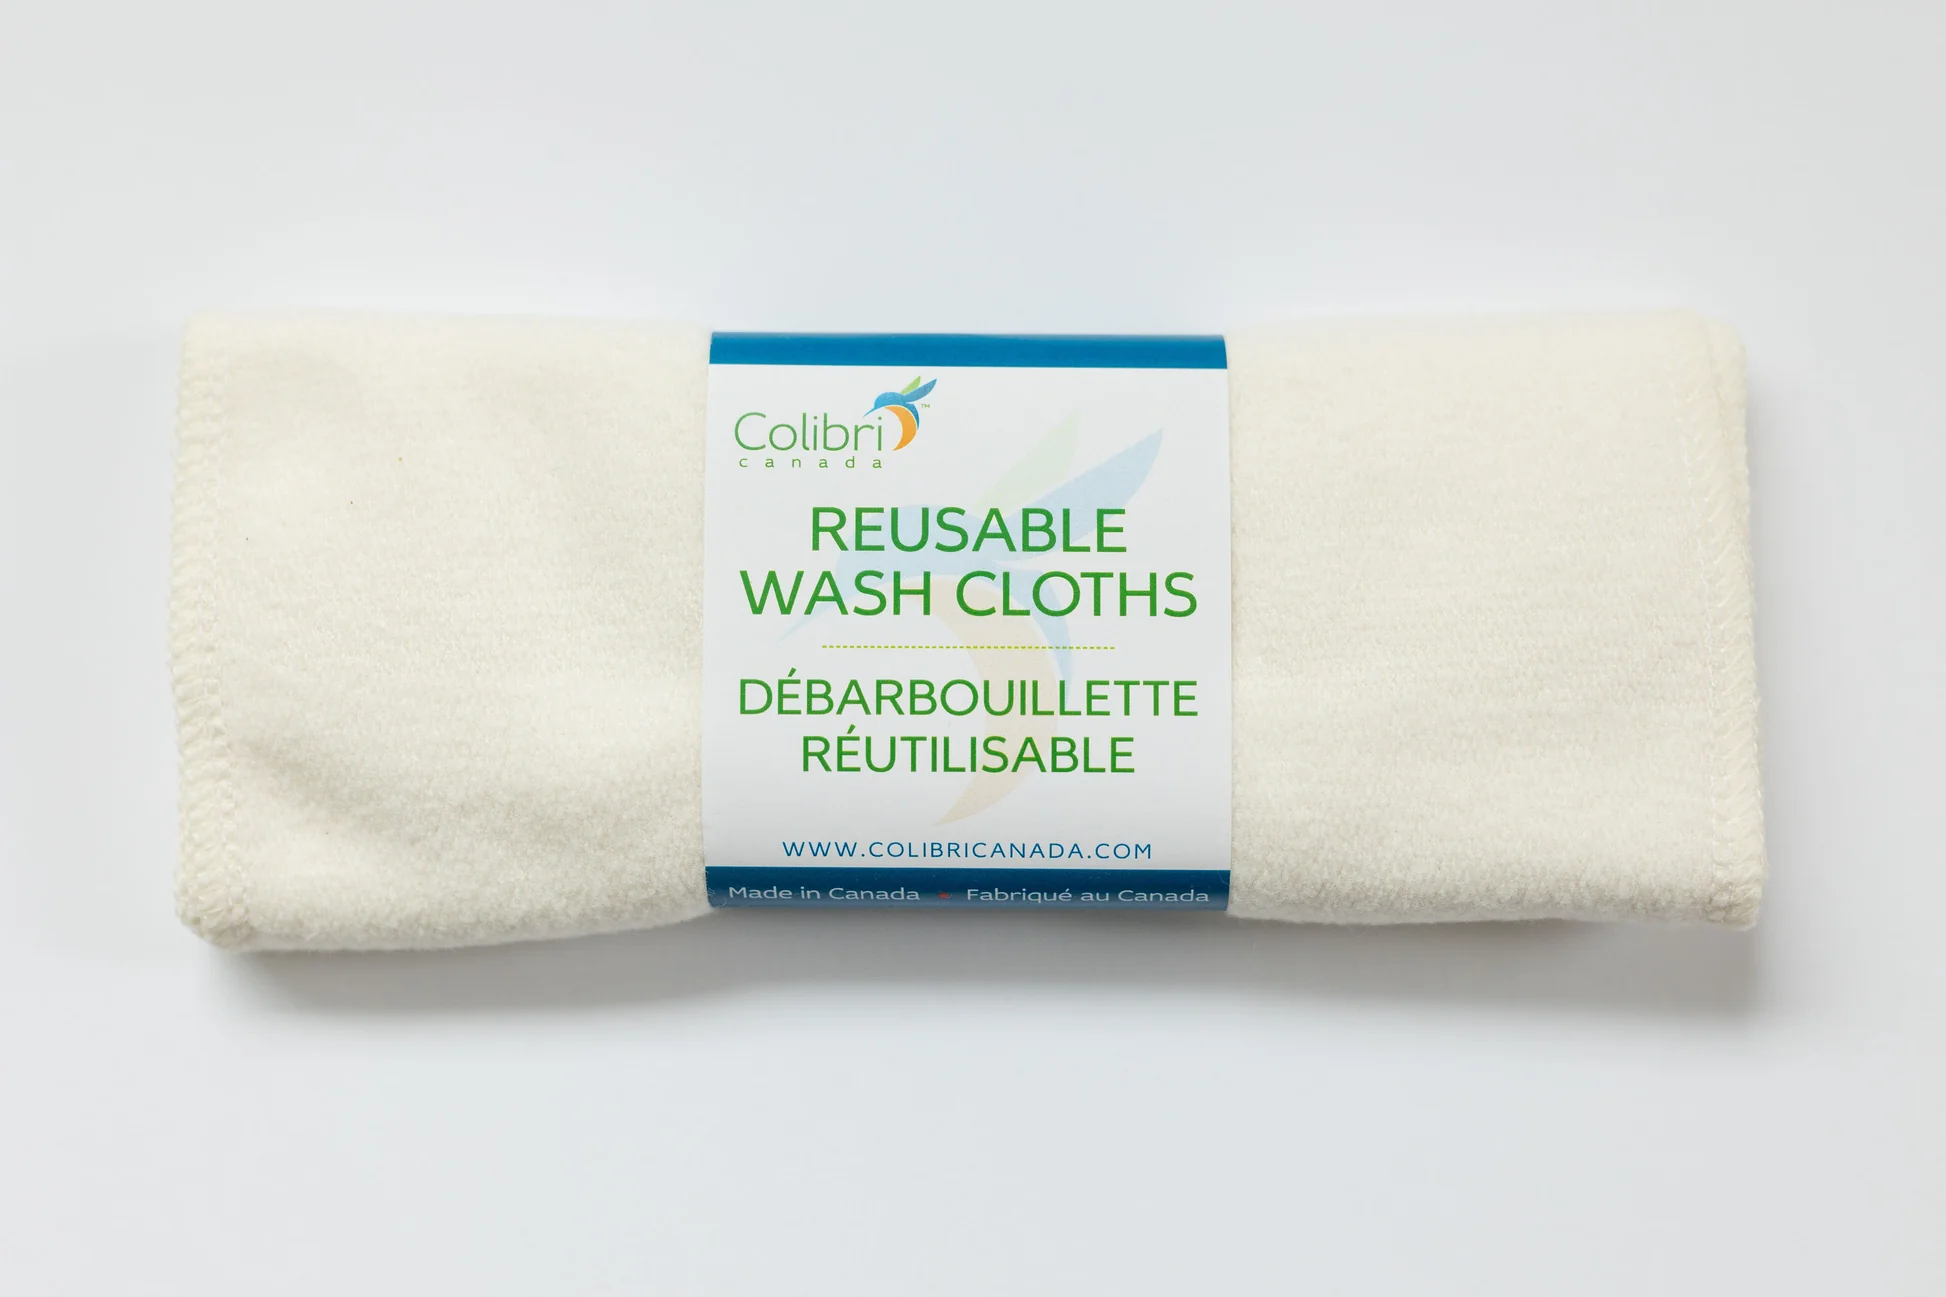 colibri reusable wash cloths